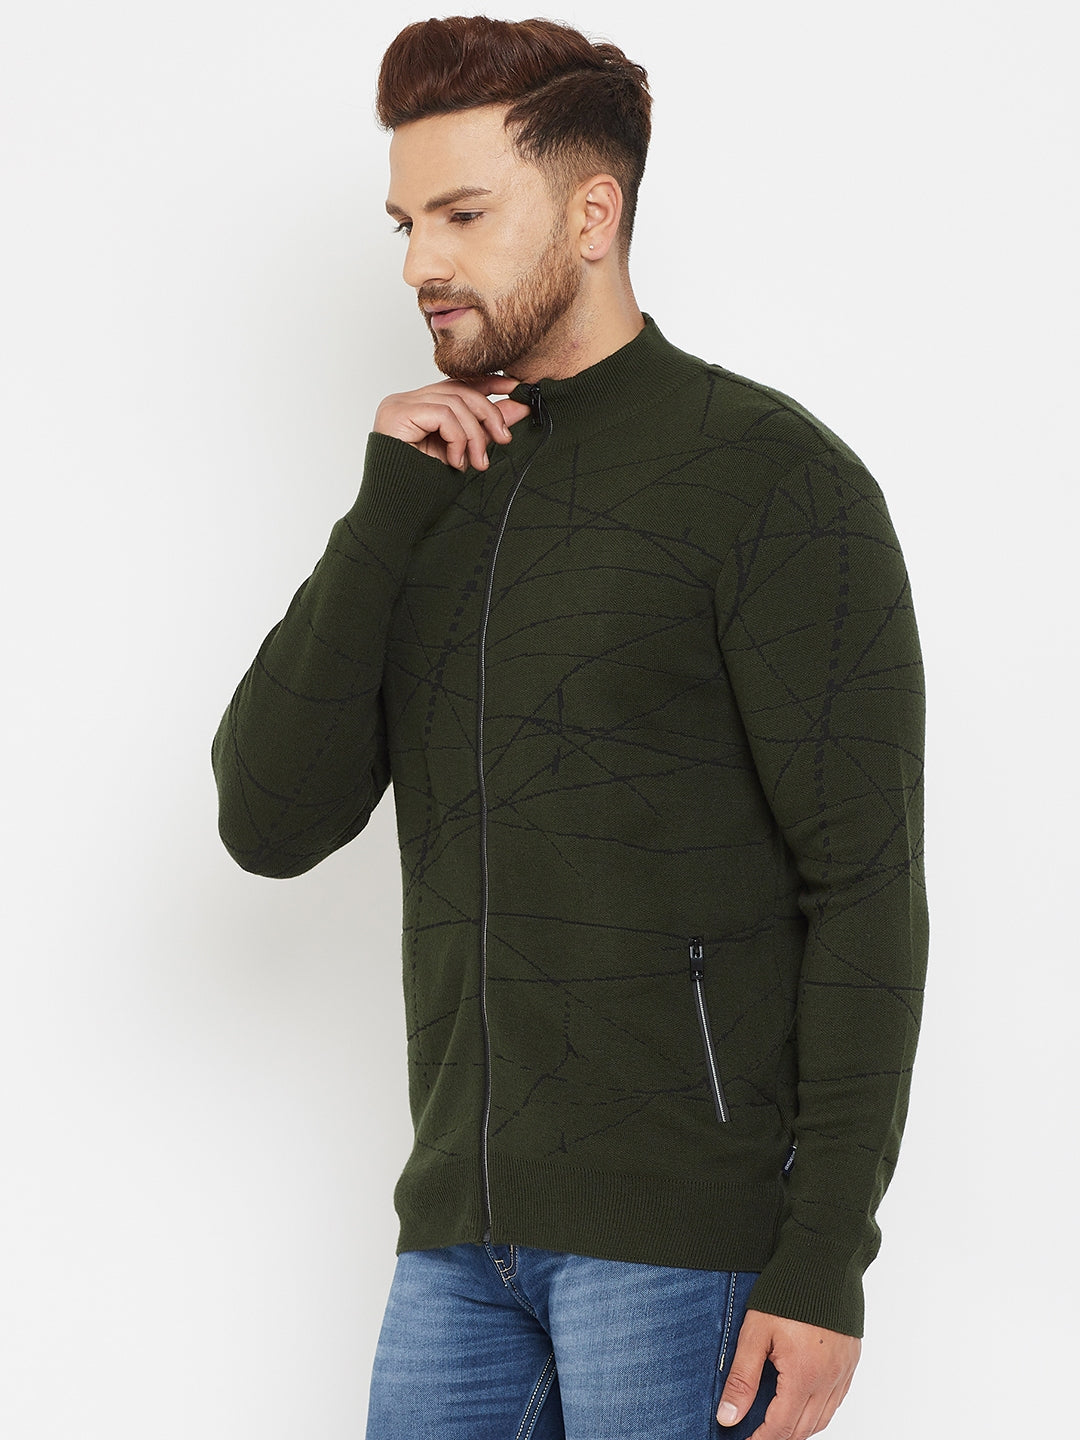 Olive Printed Zipper Sweater - Men Sweaters